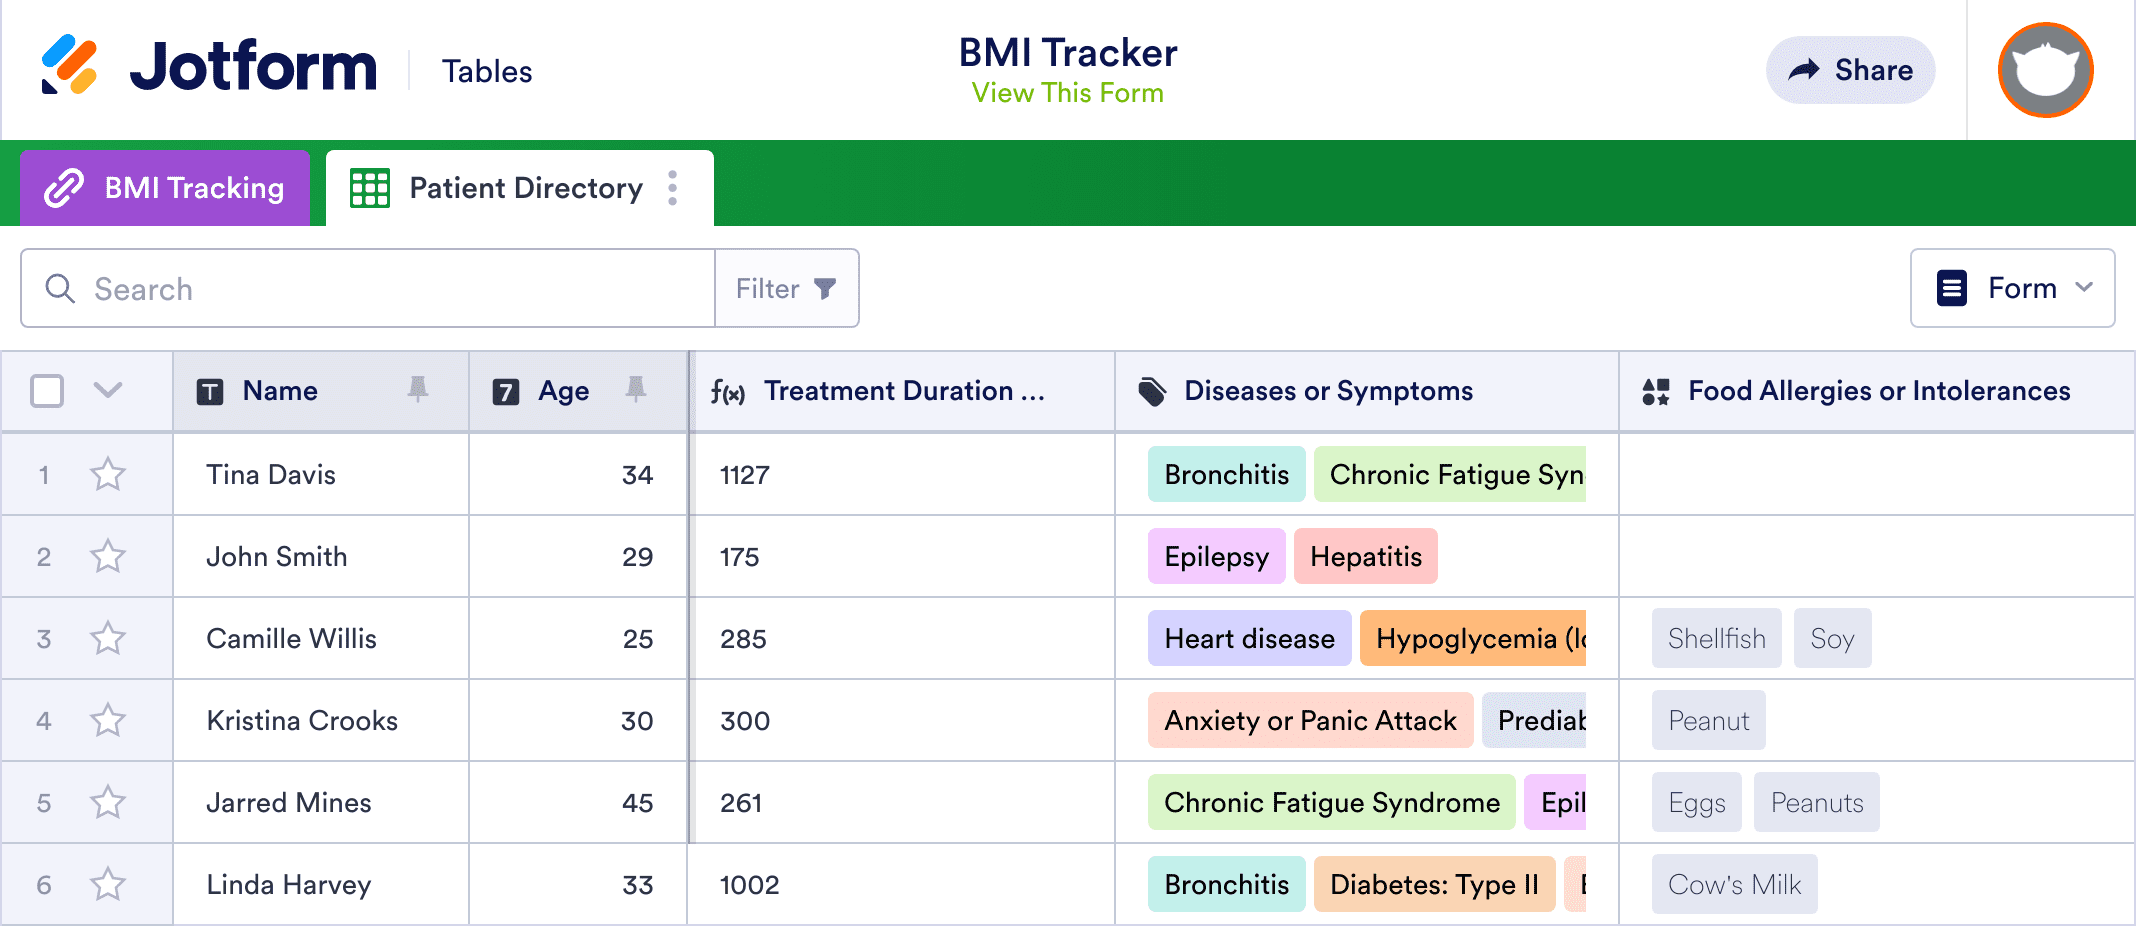 BMI Tracker Template | Jotform Tables